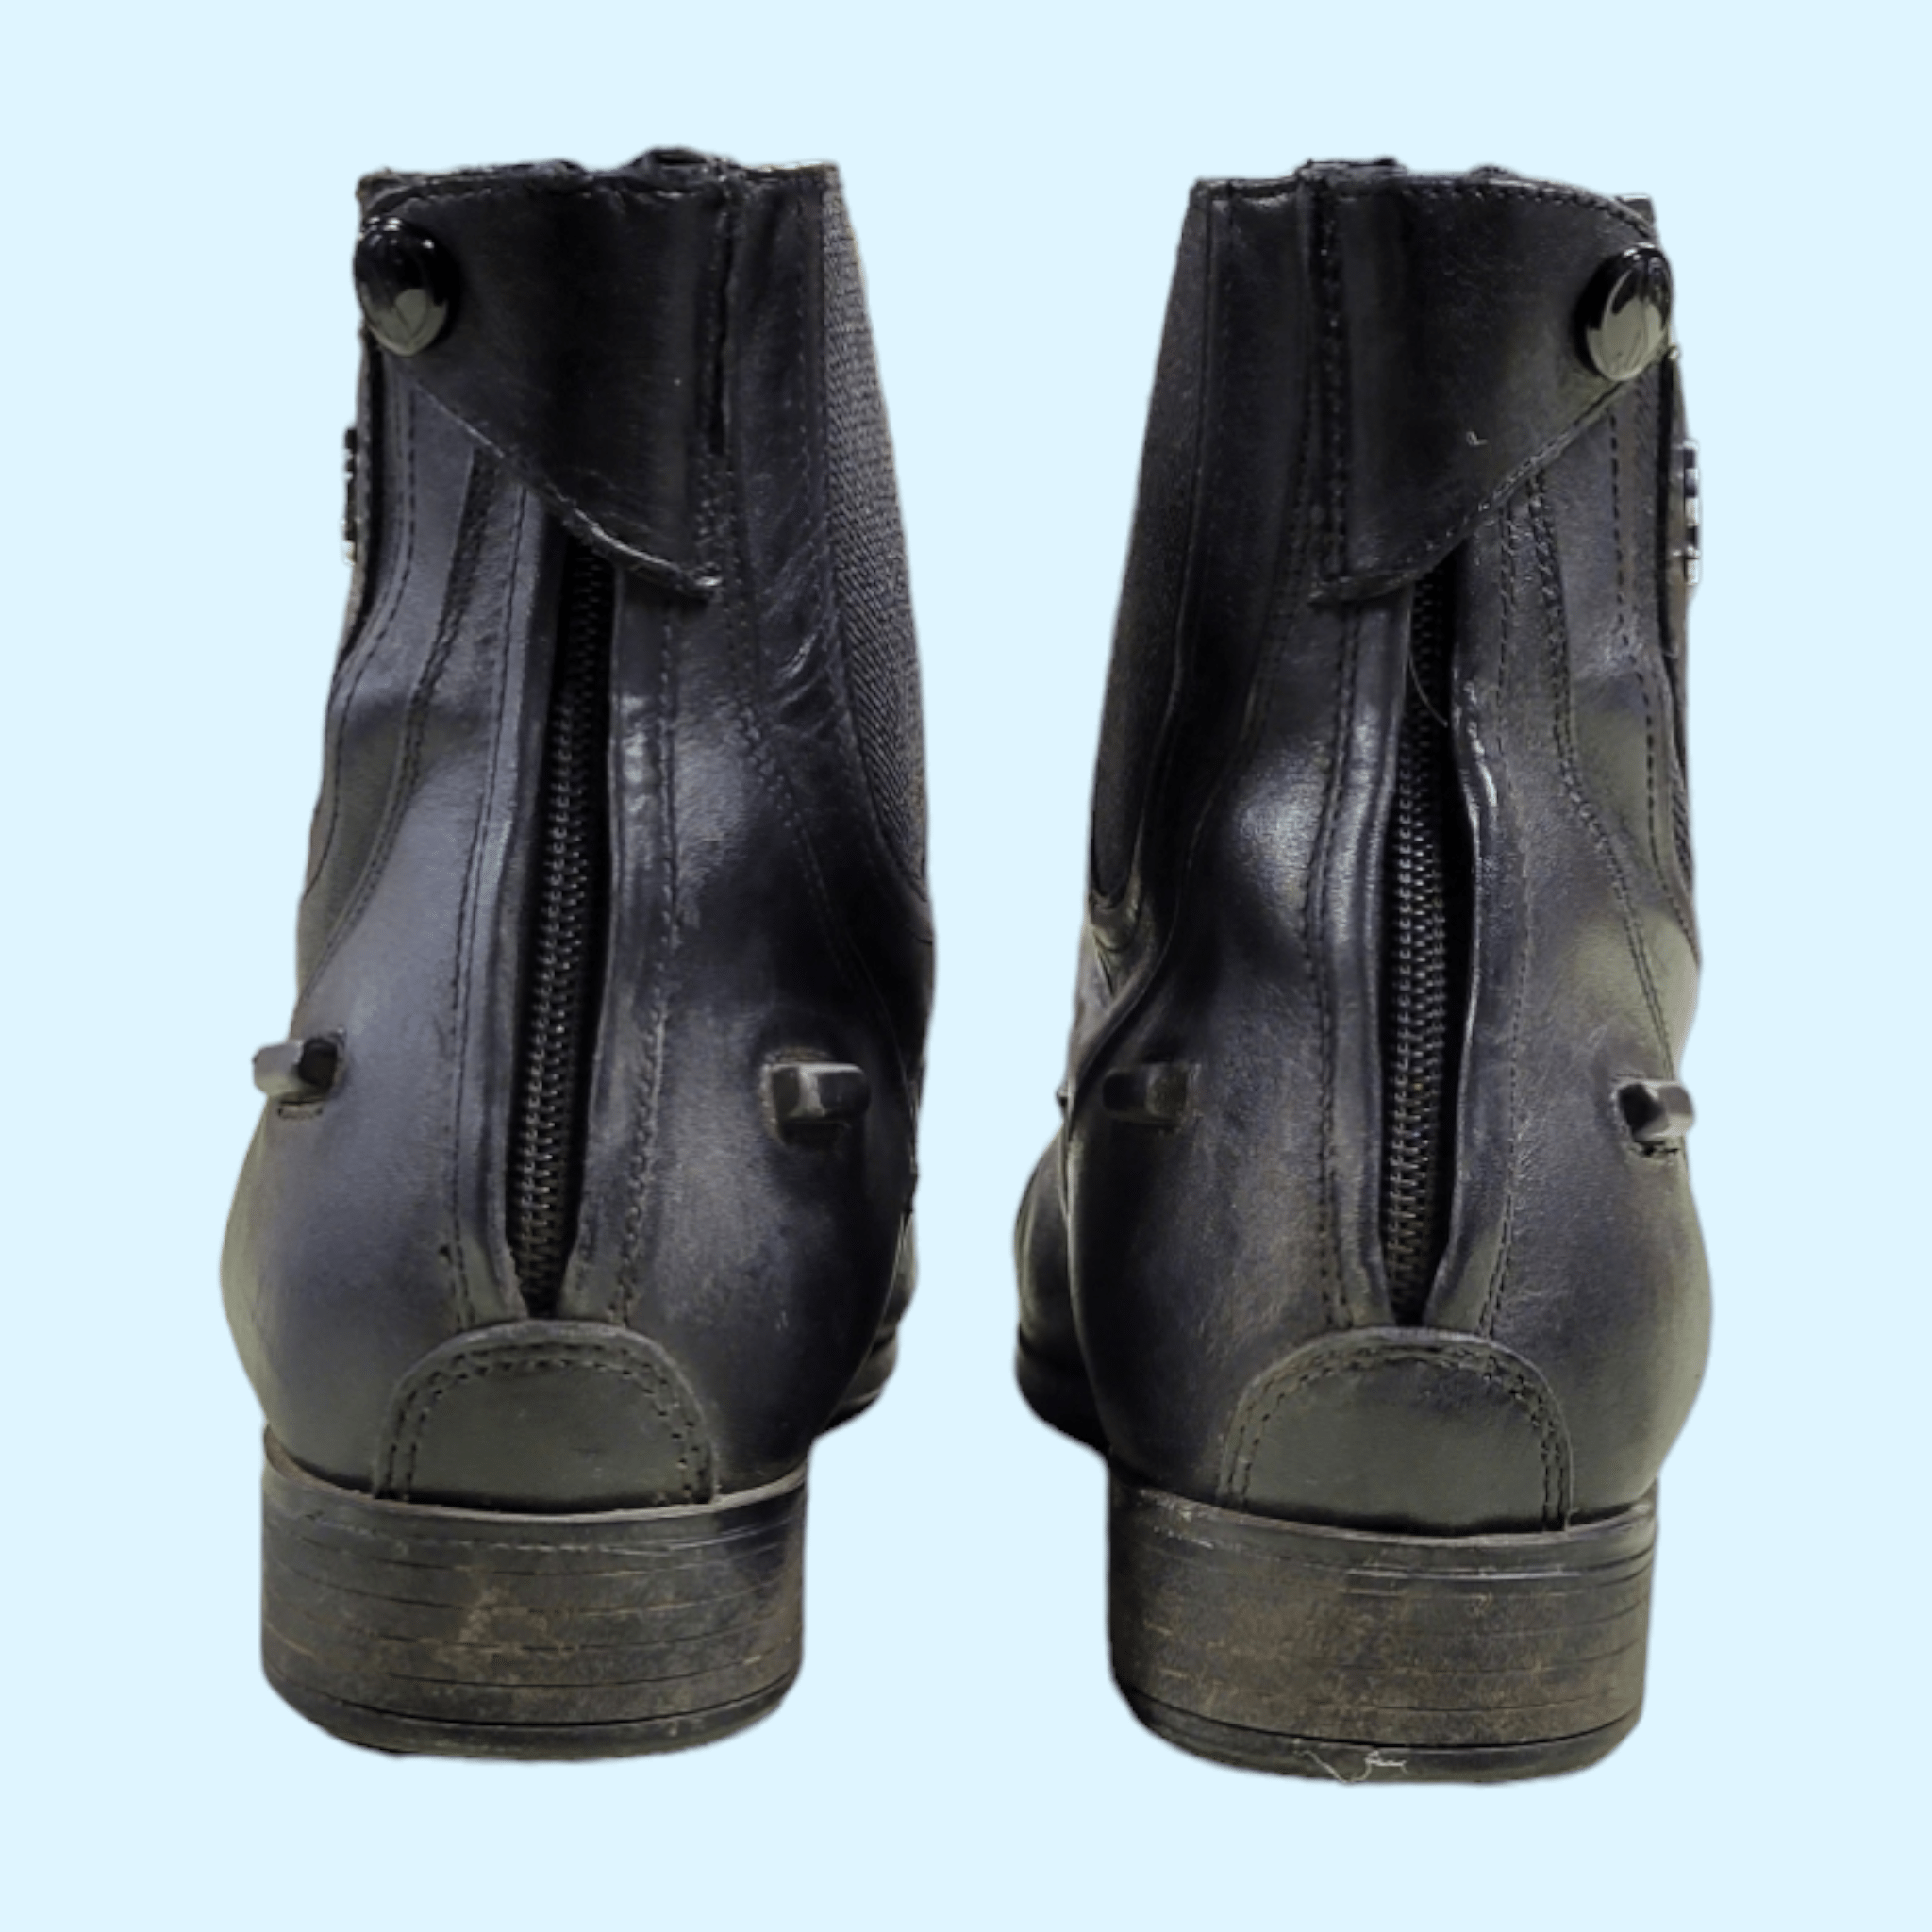 Tredstep Medici II Rear Zip Front Lace Paddock Boots in Black - 39/8-8.5 - Equine Exchange Tack Shop